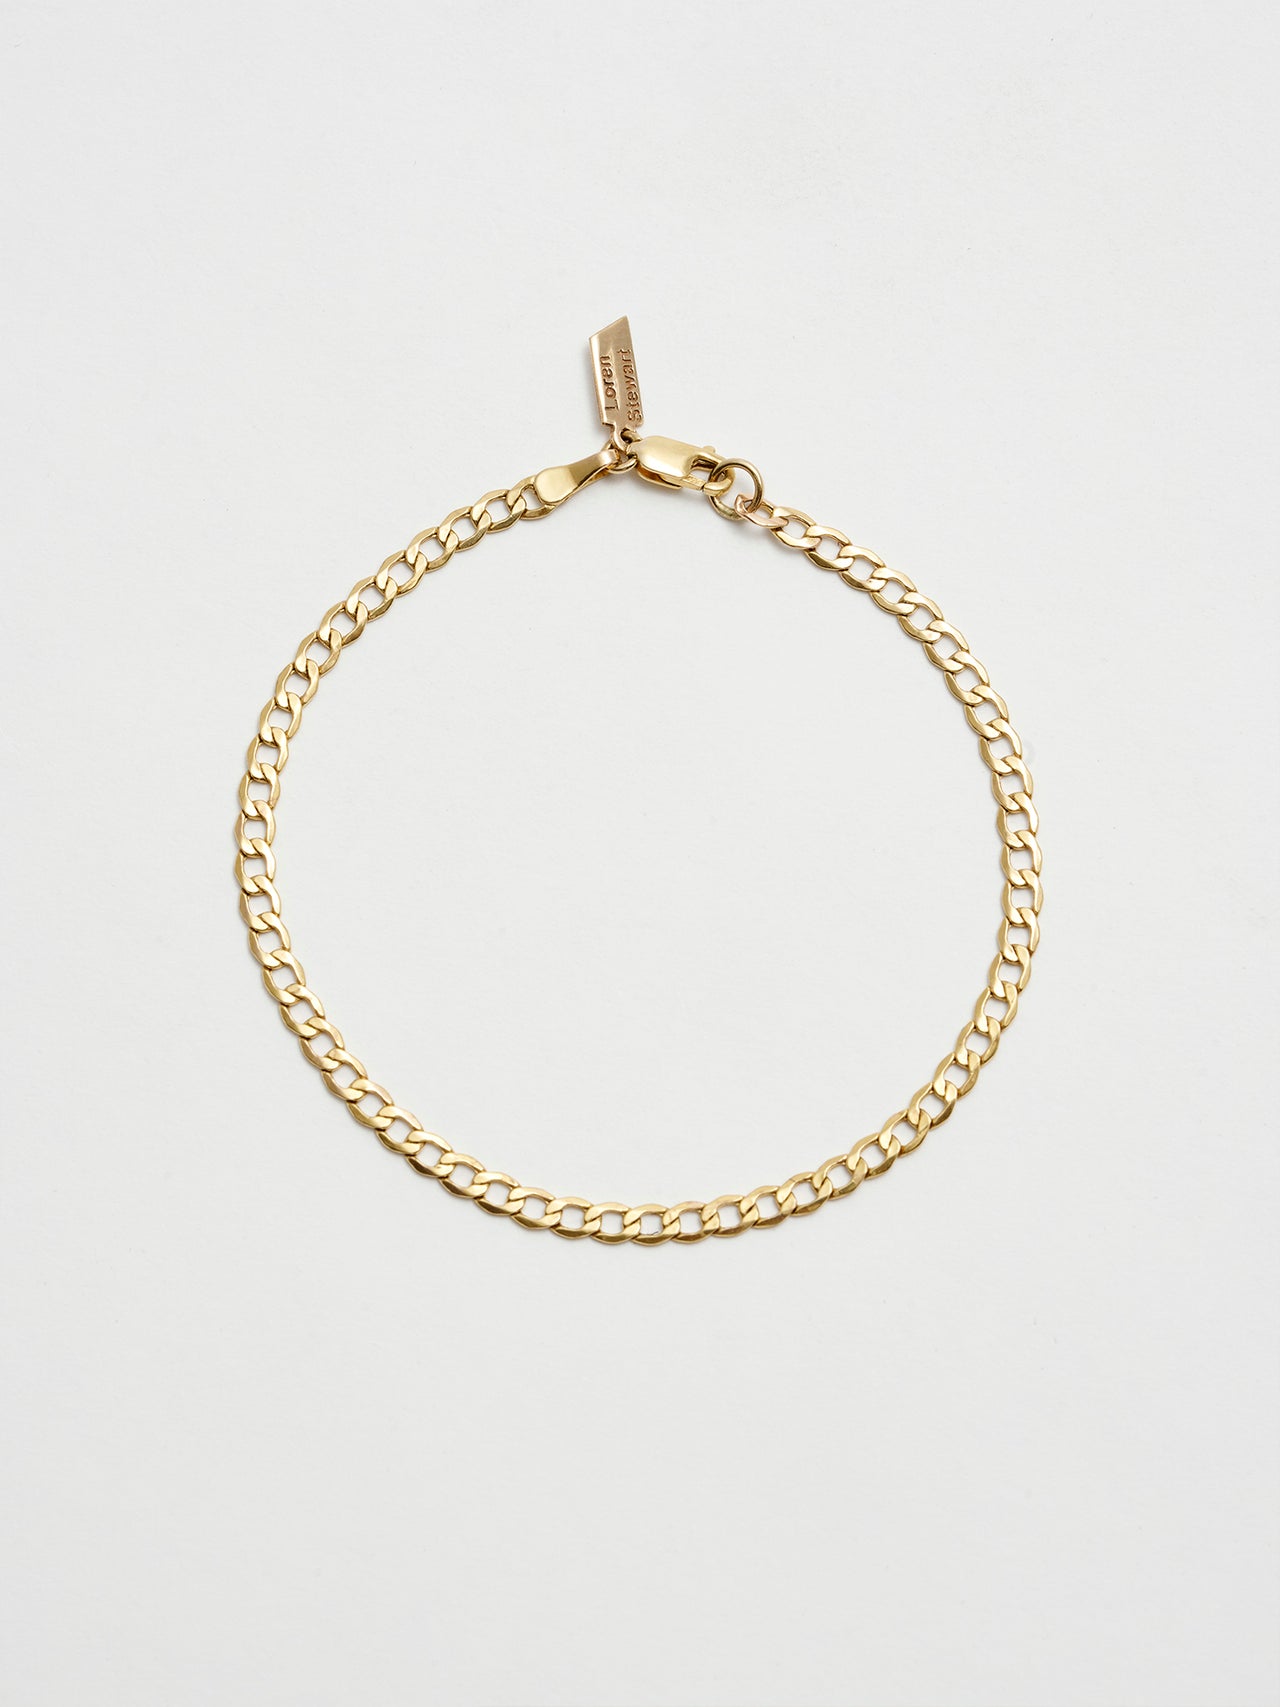 XL Lightweight Havana Chain Bracelet: 14Kt Yellow Gold-Plated Sterling Silver Hollow Chain Bracelet Length: 7” Width: 3.3mm